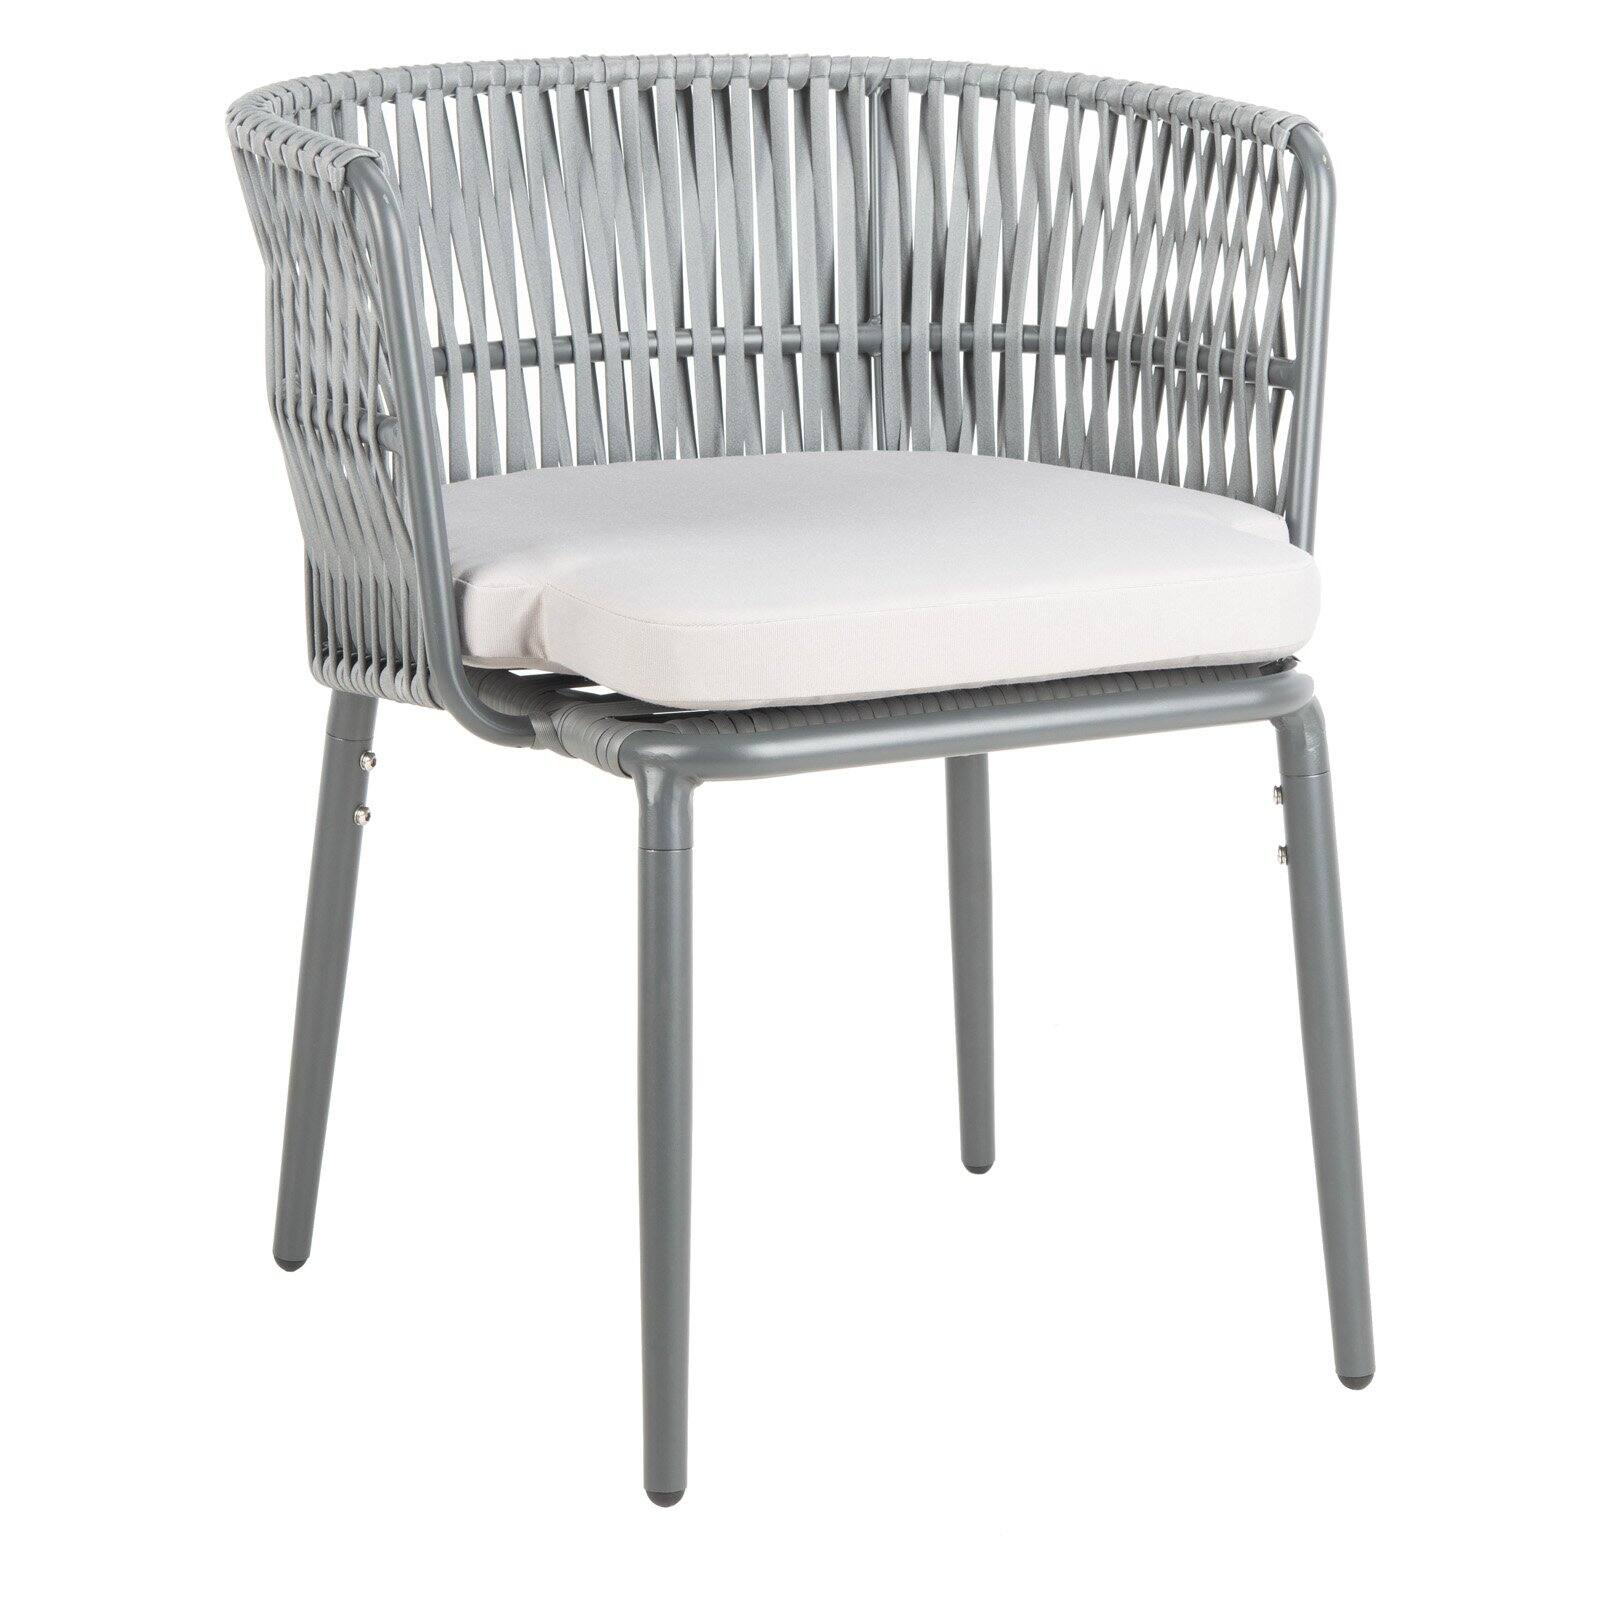 SAFAVIEH Kiyan Outdoor Patio Rope Chair, Grey/Cushion, Set of 2 - image 2 of 10